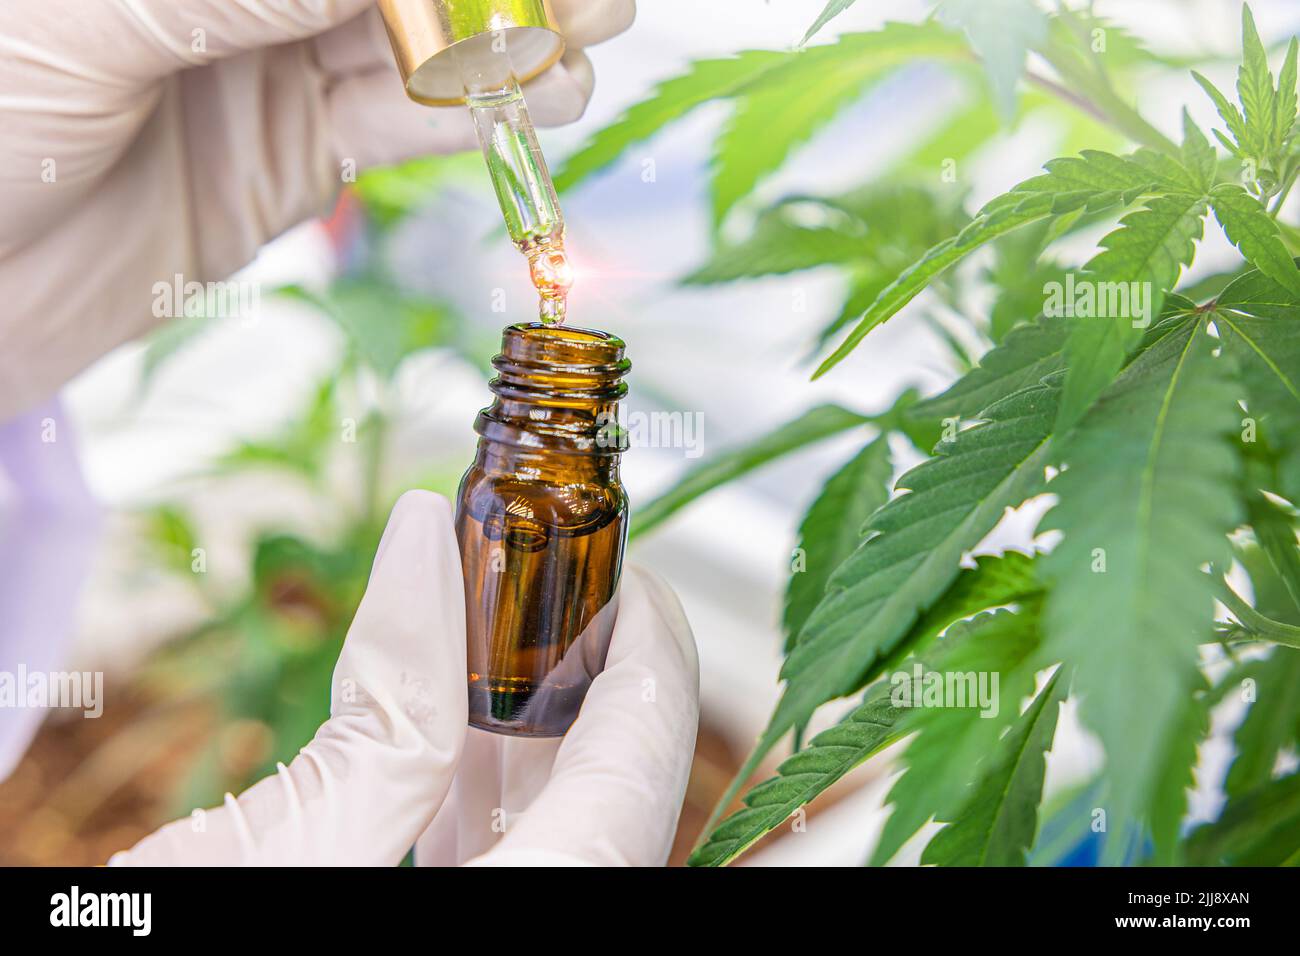 closeup hand drop hemp oil cannabis extract CBD medical product for pain relief from marijuana plant. Stock Photo